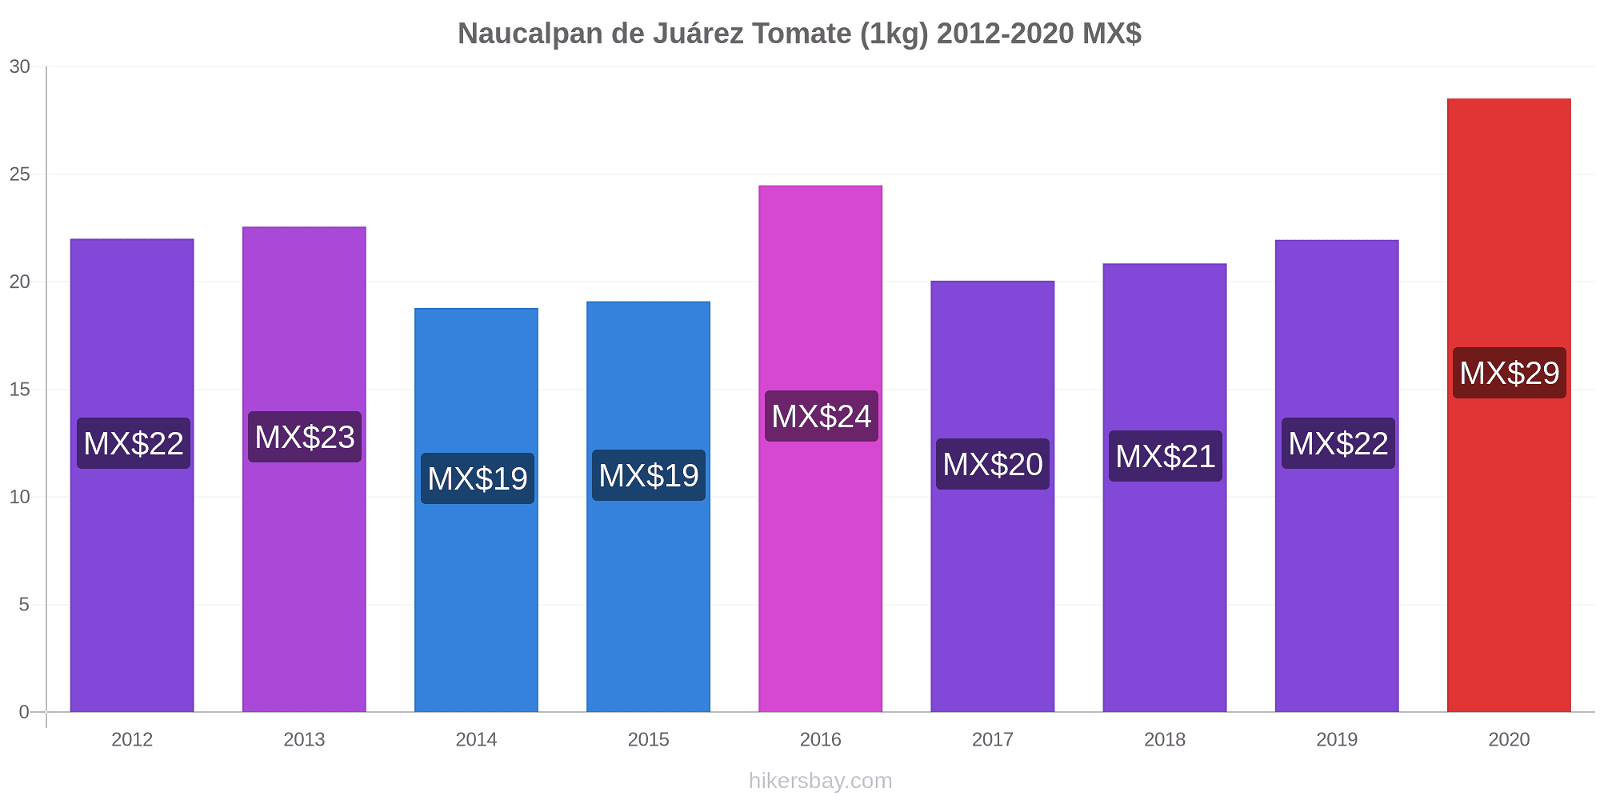 Naucalpan de Juárez changements de prix Tomate (1kg) hikersbay.com